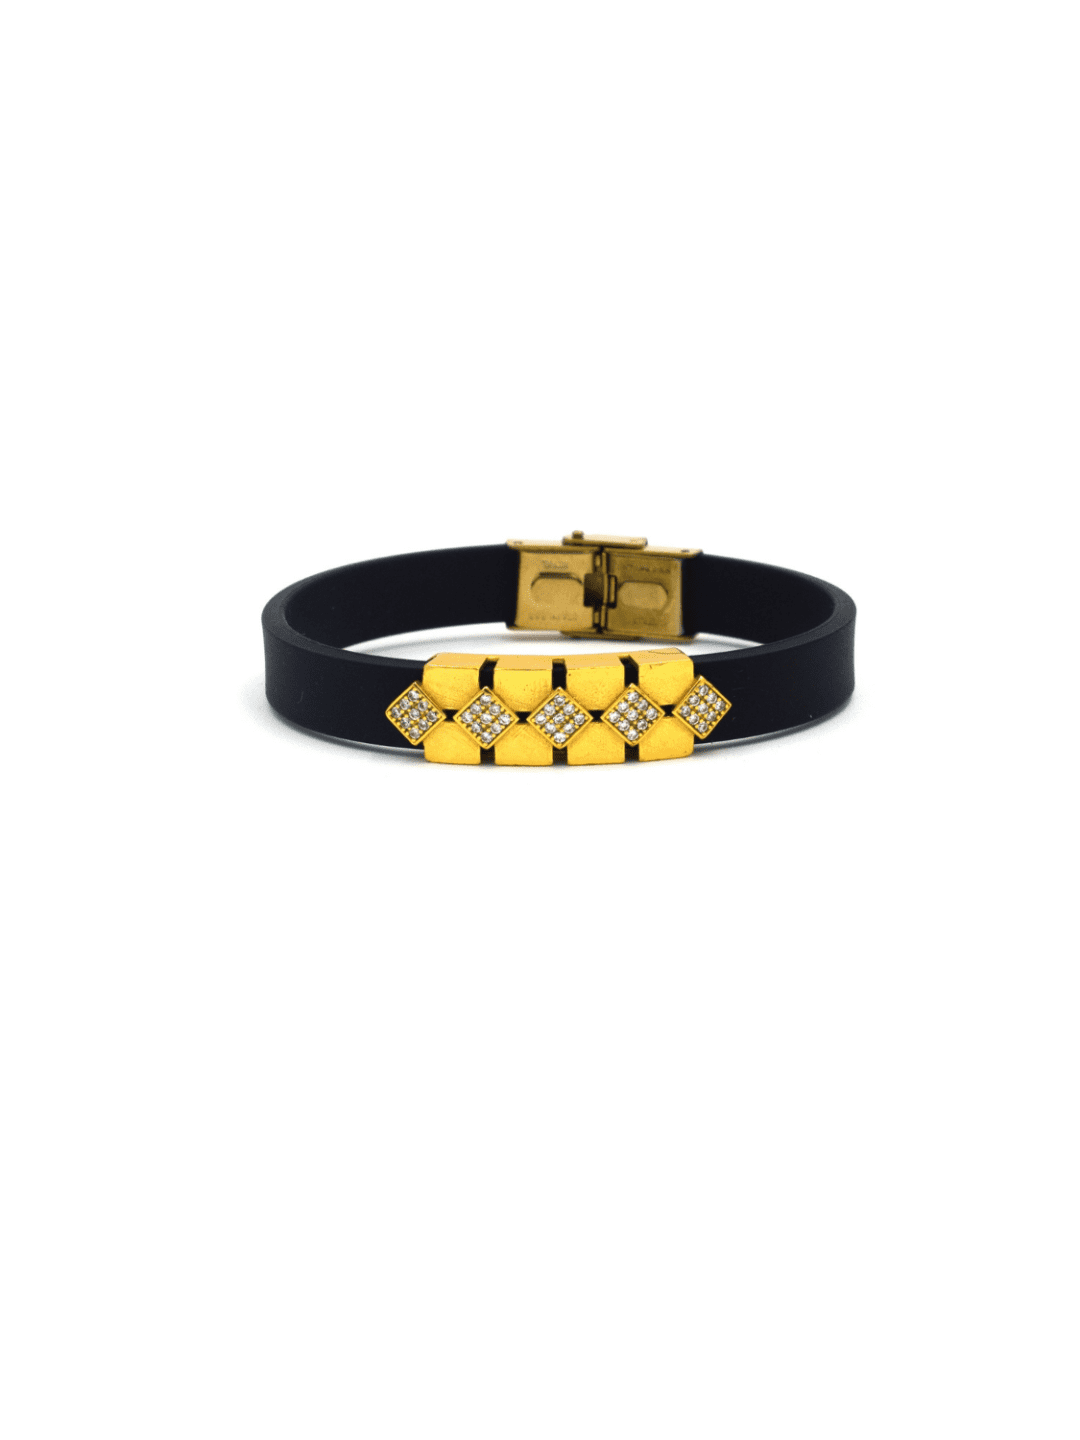 Black & Yellow Leather Bracelet - QUEENS JEWELS